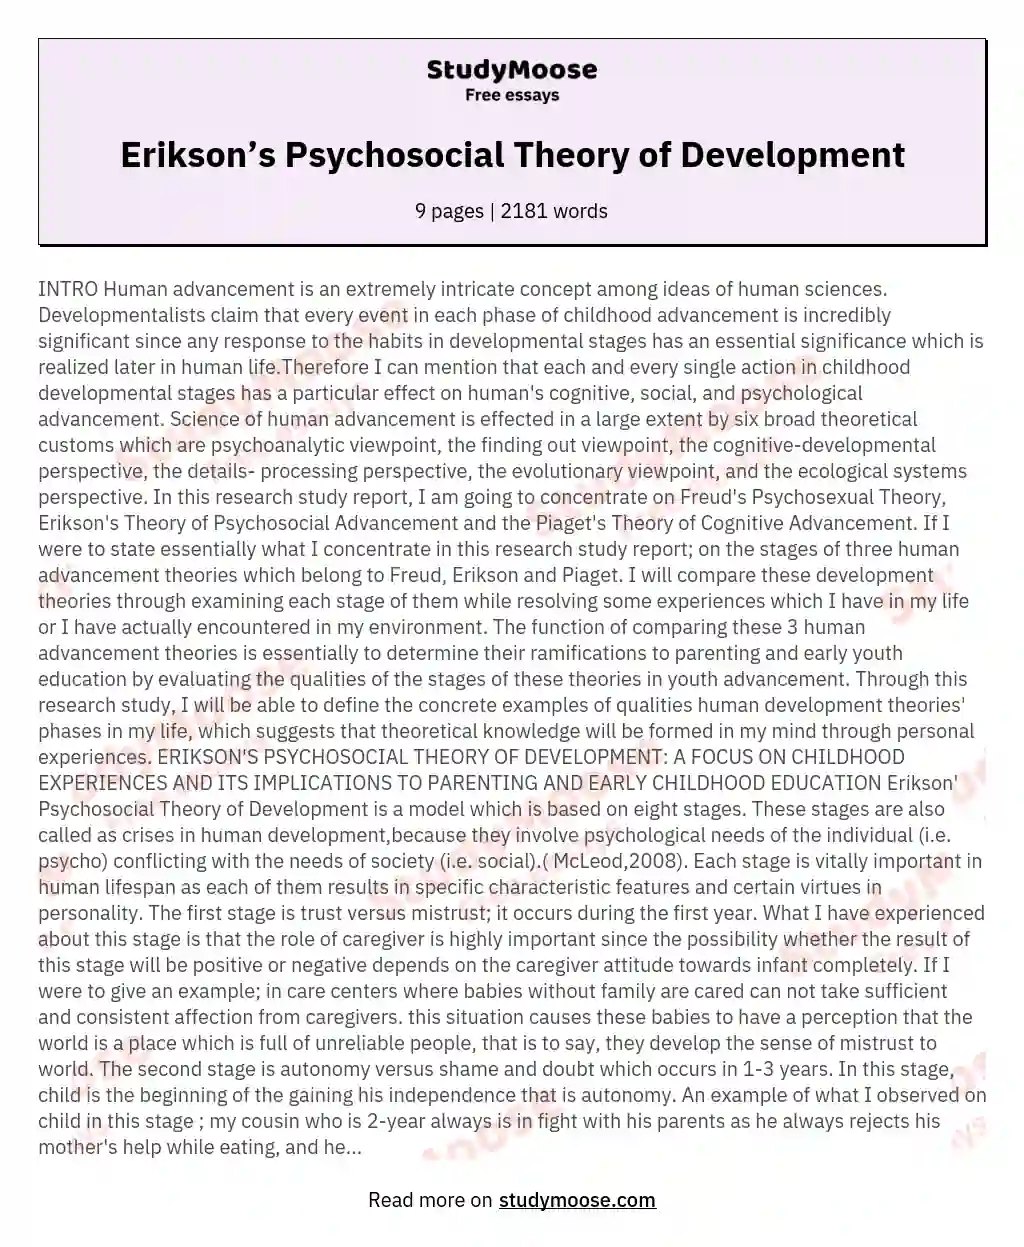 Erikson’s Psychosocial Theory of Development